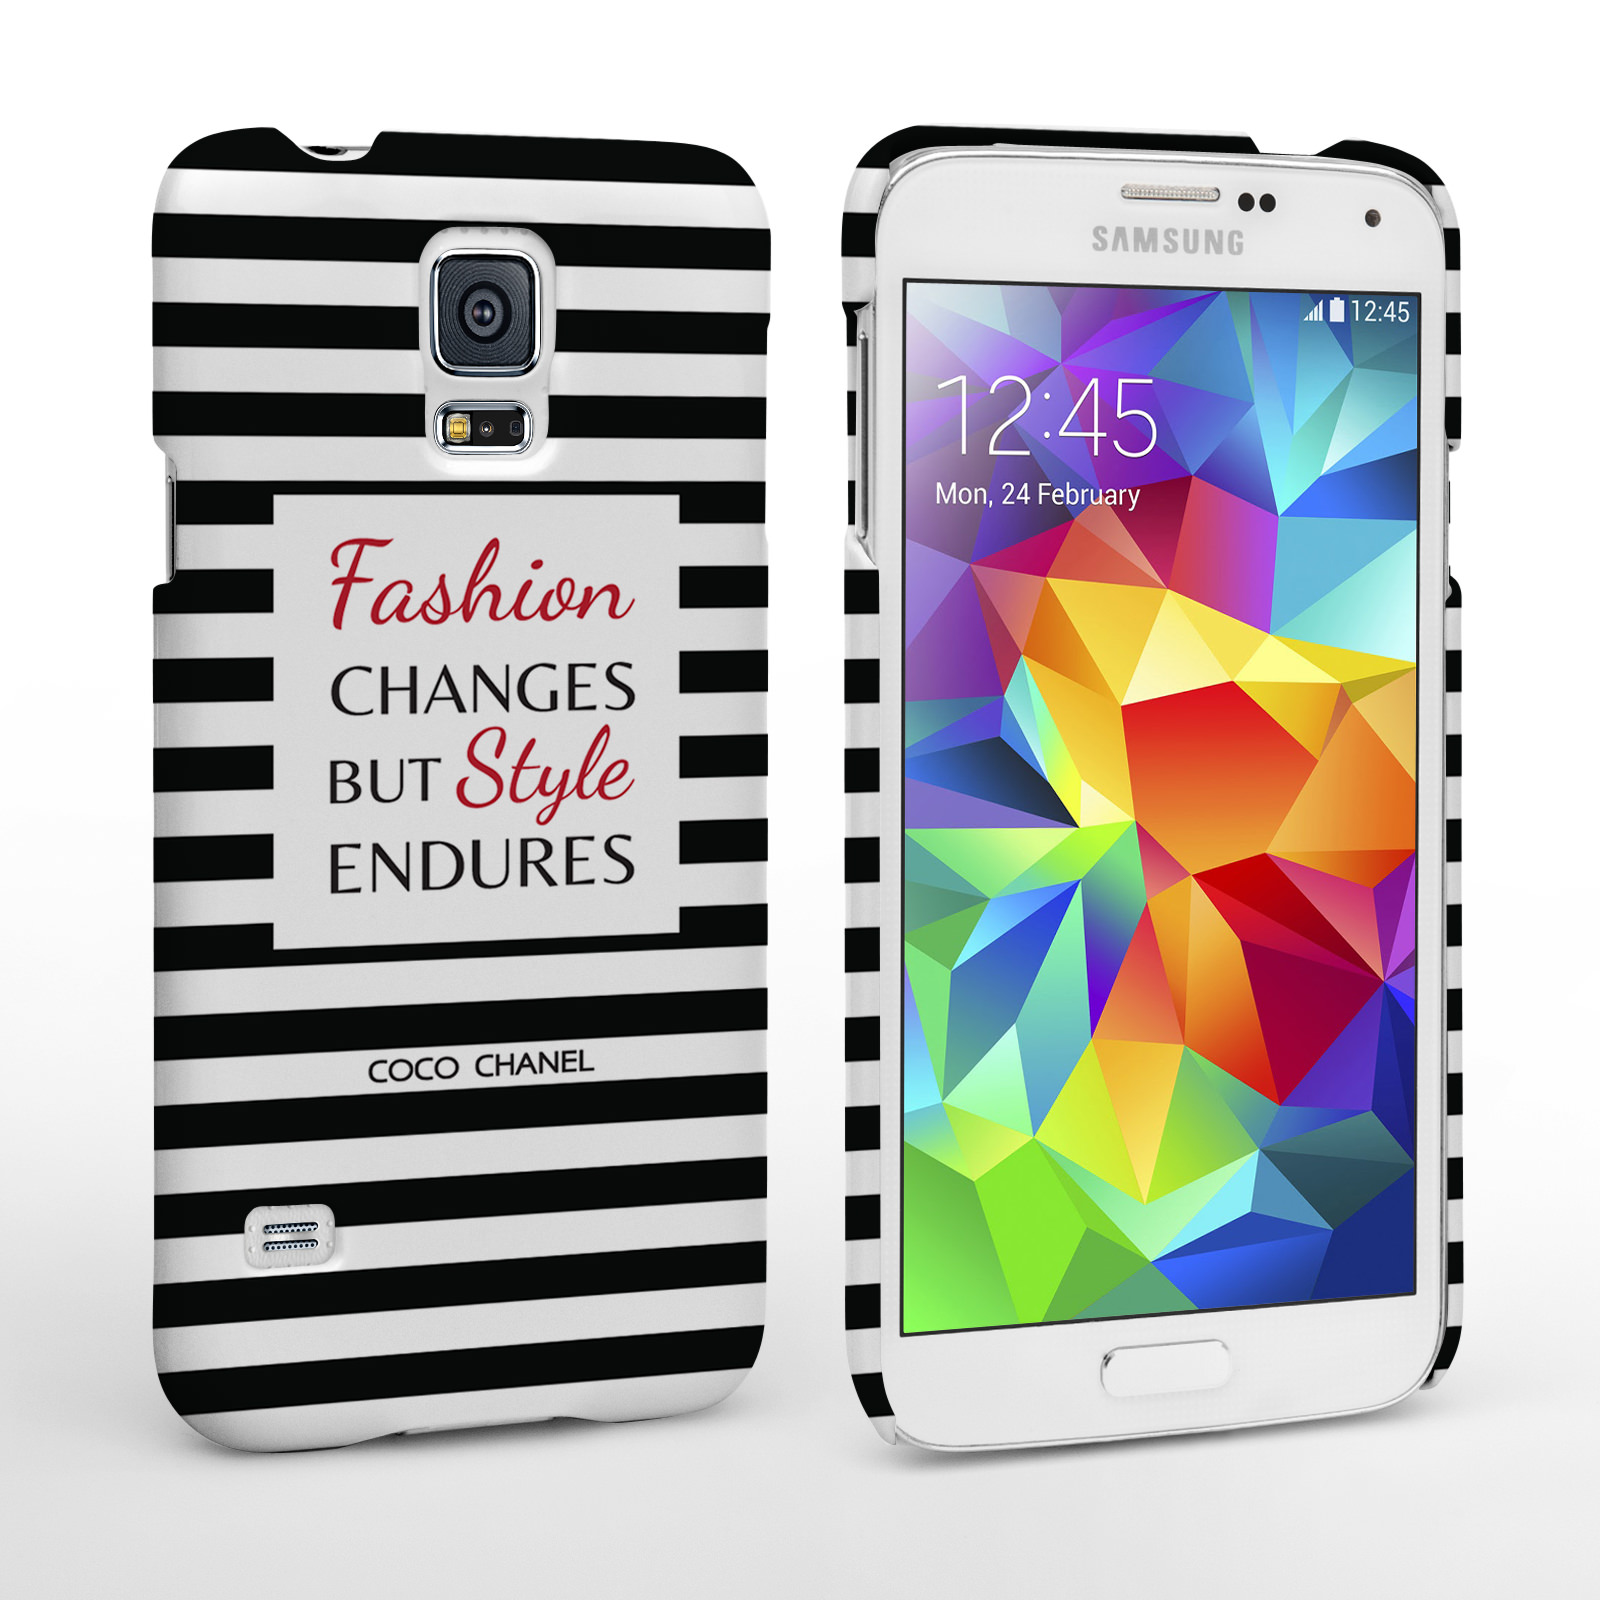 Caseflex Samsung Galaxy S5 Chanel ‘Fashion Changes’ Quote Case – Black and White